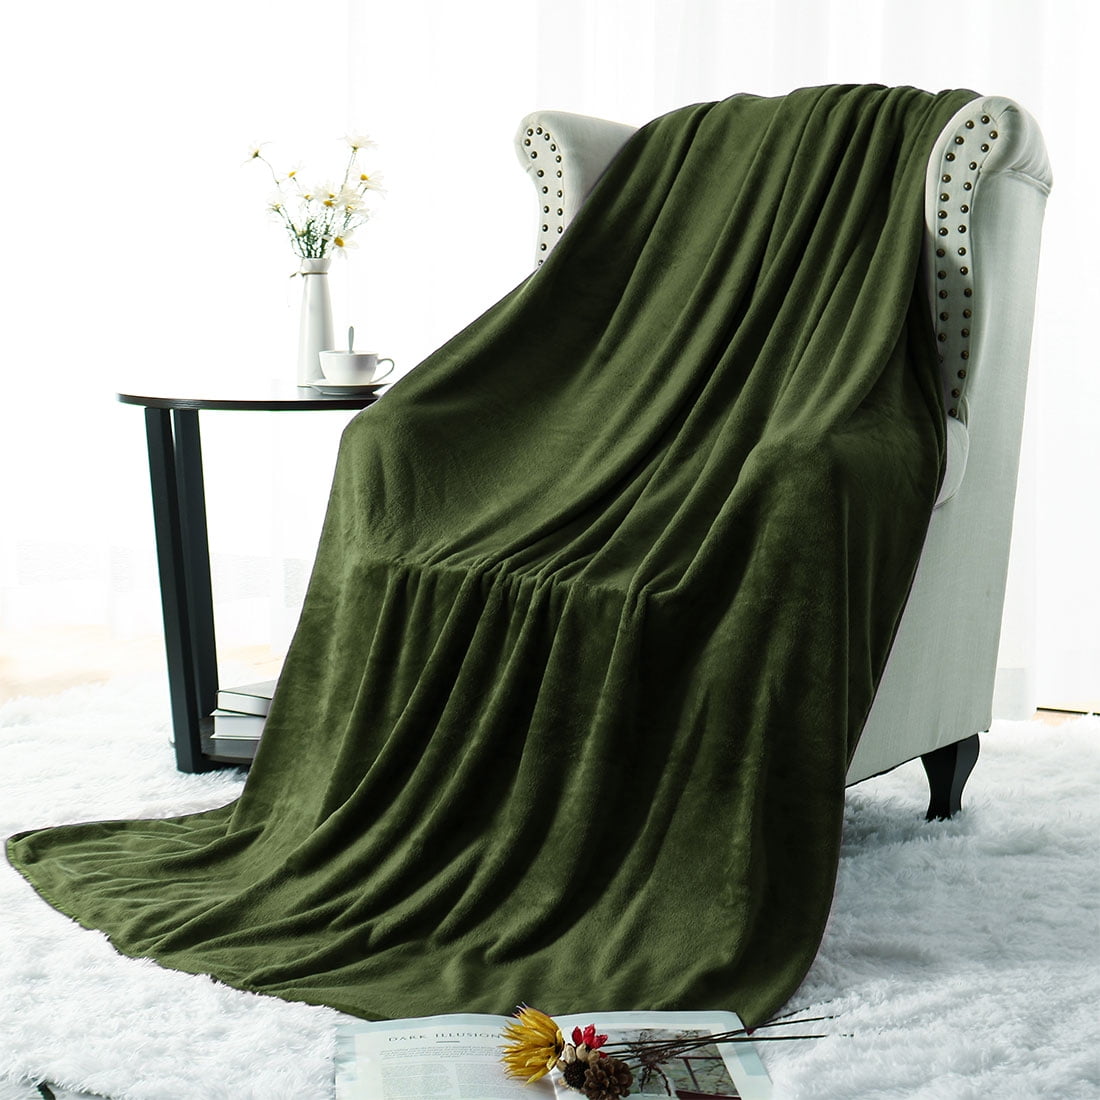 Home Bedroom All Season Lightweight Soft Warm Fuzzy Microplush Fleece Bed Blanket Olive Green